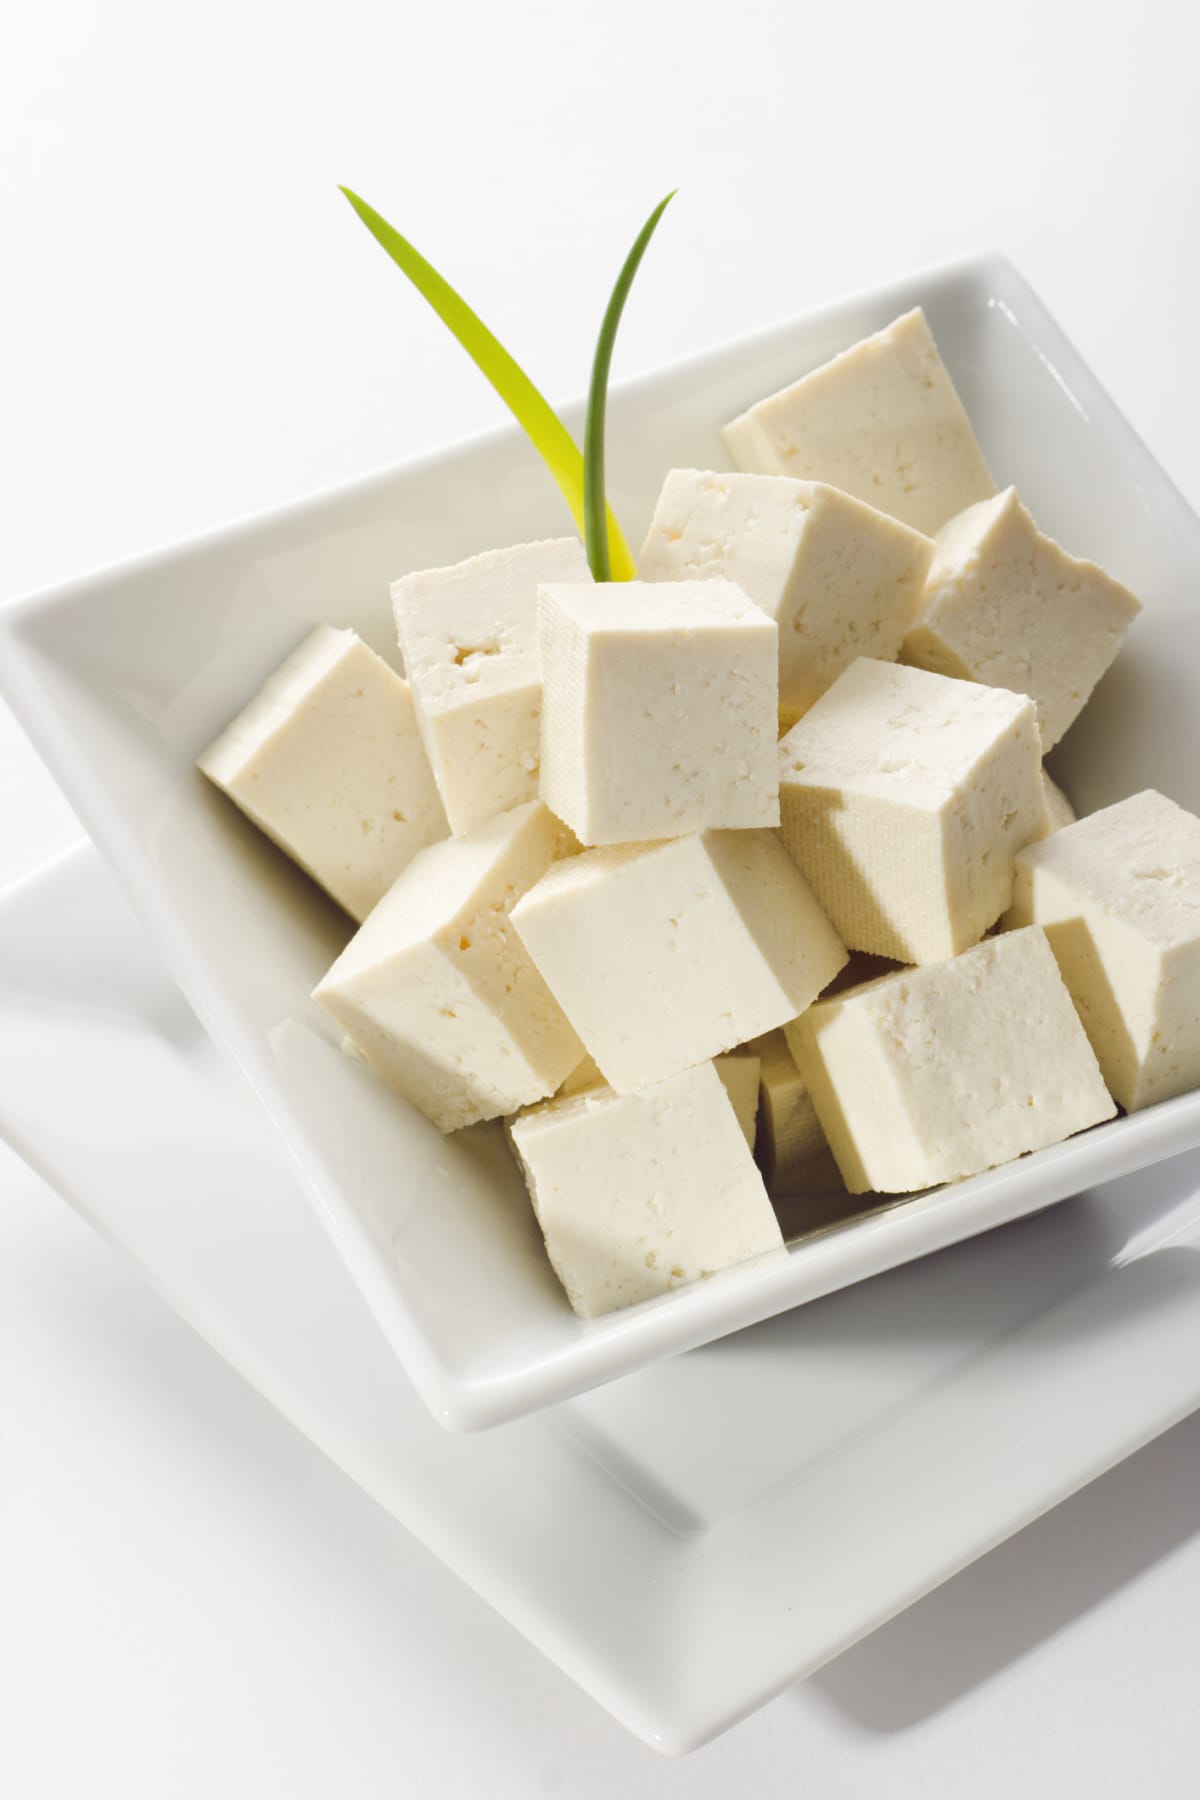 Cubed tofu in a white bowl